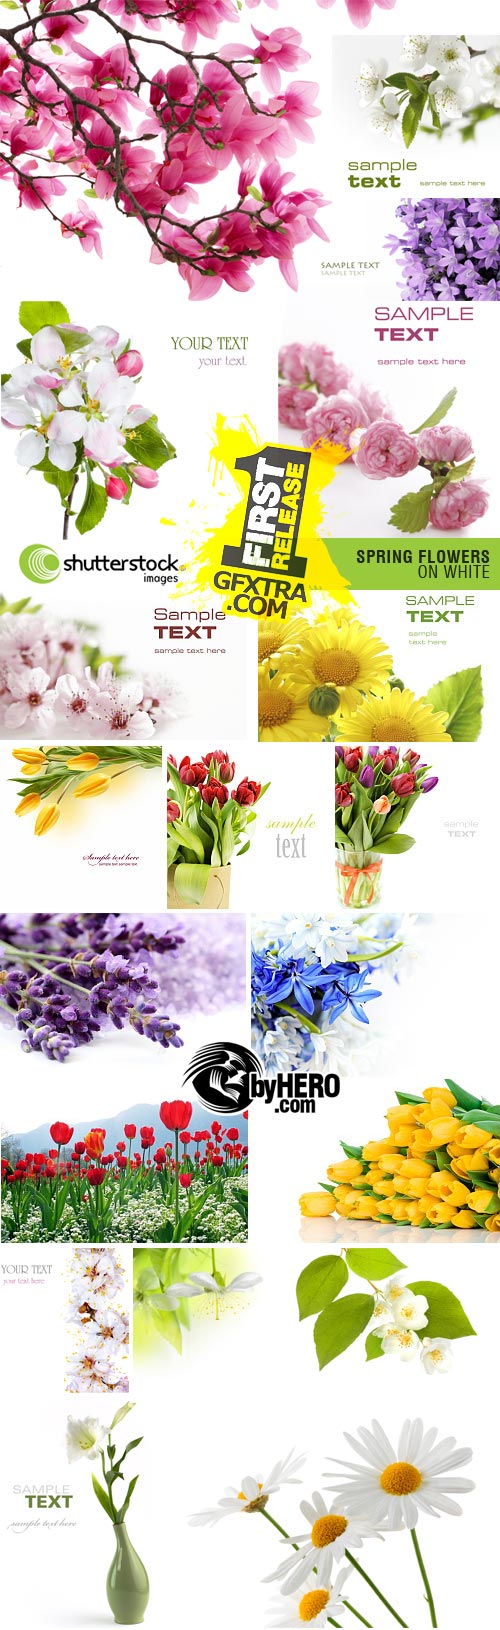 Shutterstock - Spring Flowers 22xJPGs